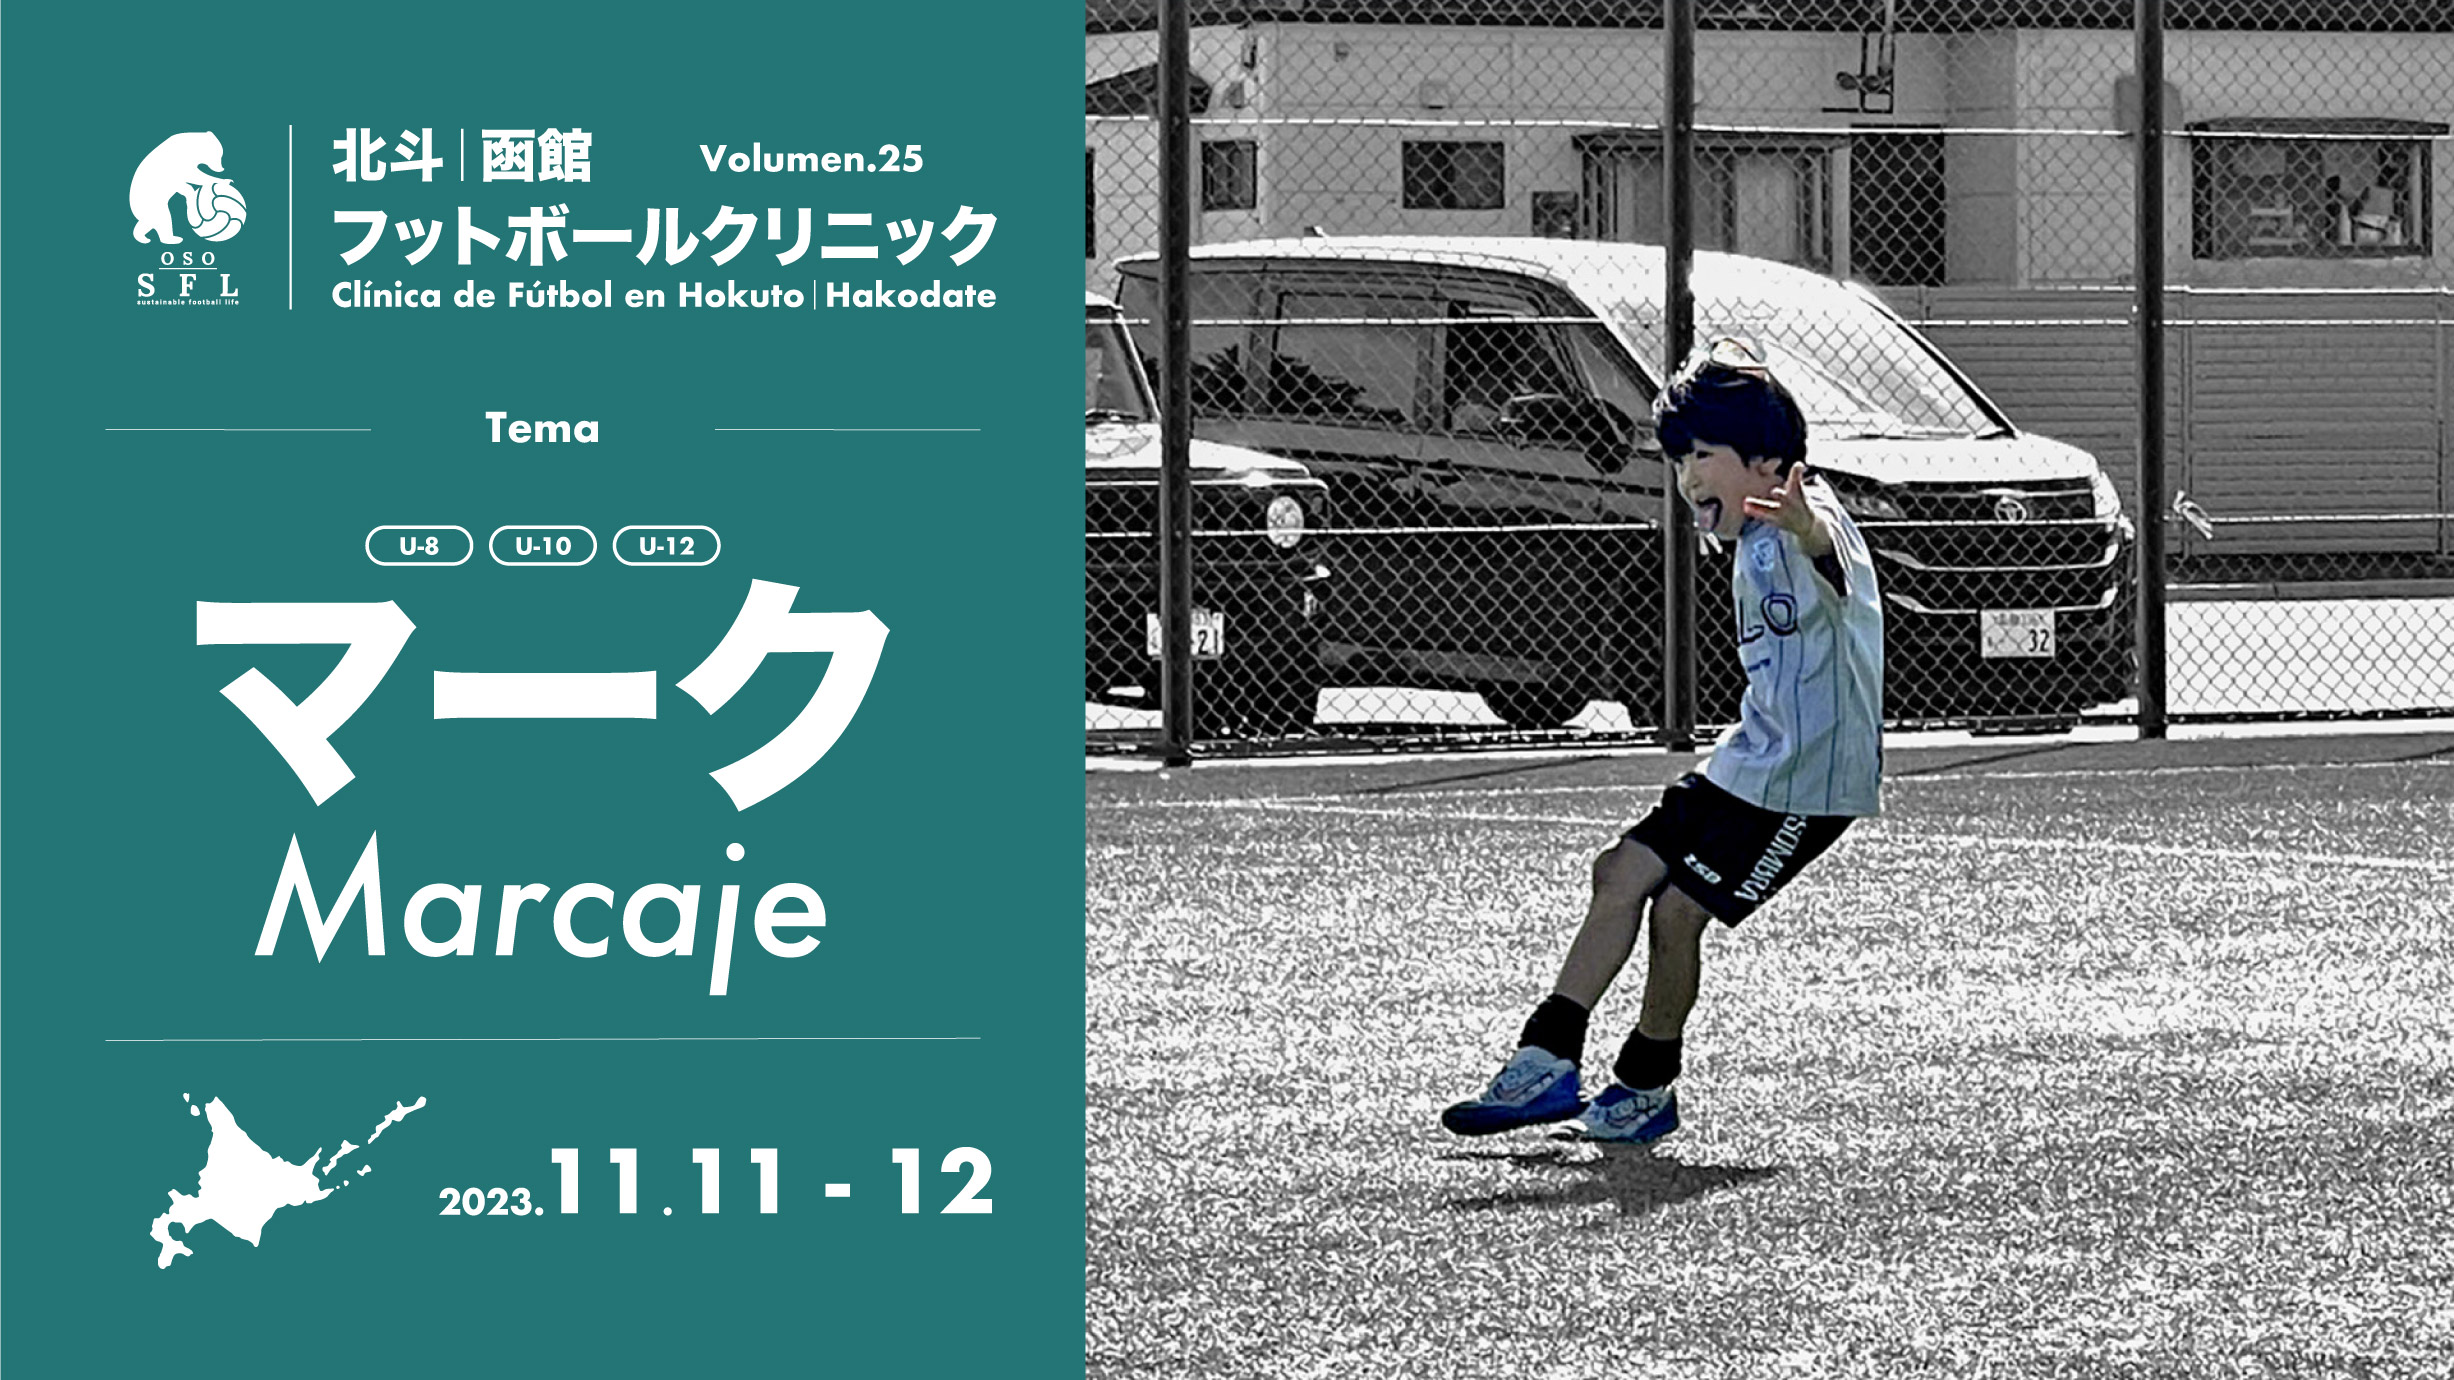 20231017_notice-hokuto-hakodate-football-clinic-2023-vol25_1920px